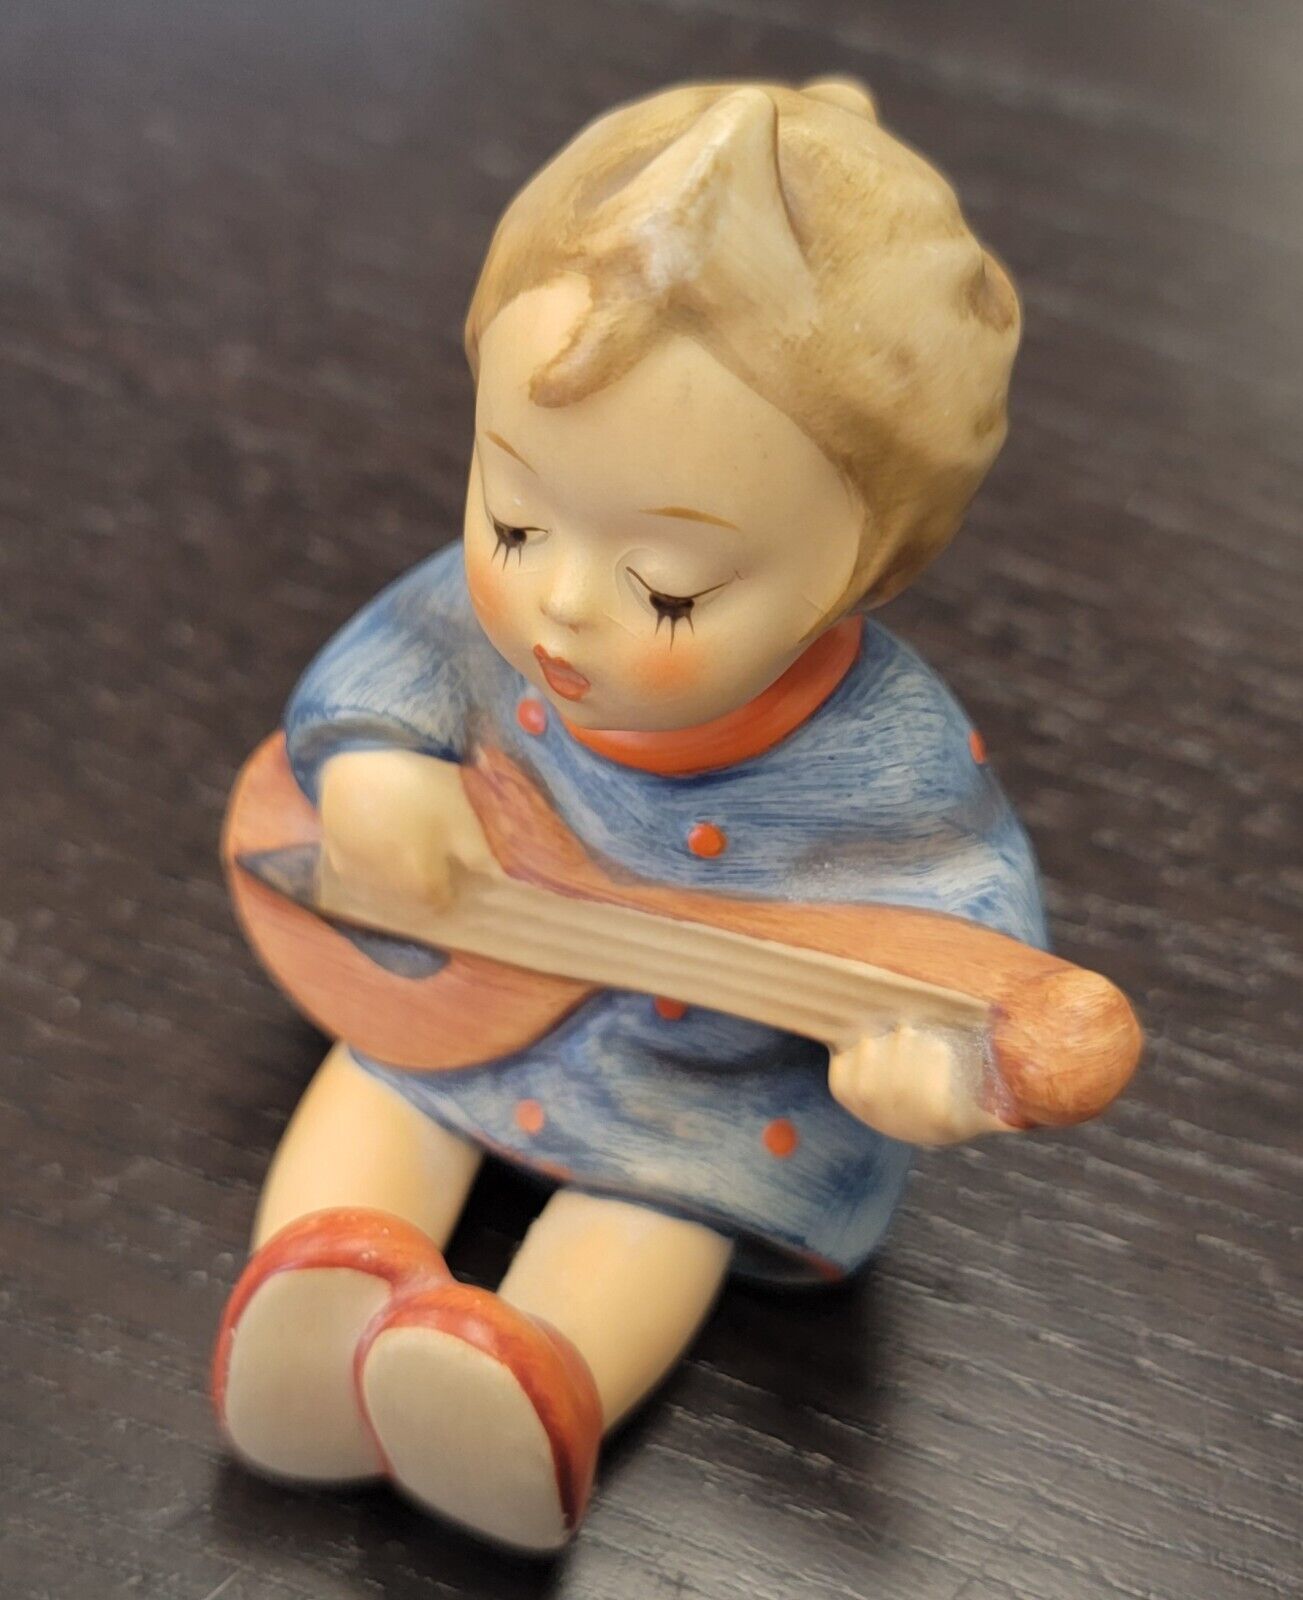 Vintage Goebel Hummel #53 Joyful Figurine TMK-6 Full Bee (R) Girl with Mandolin